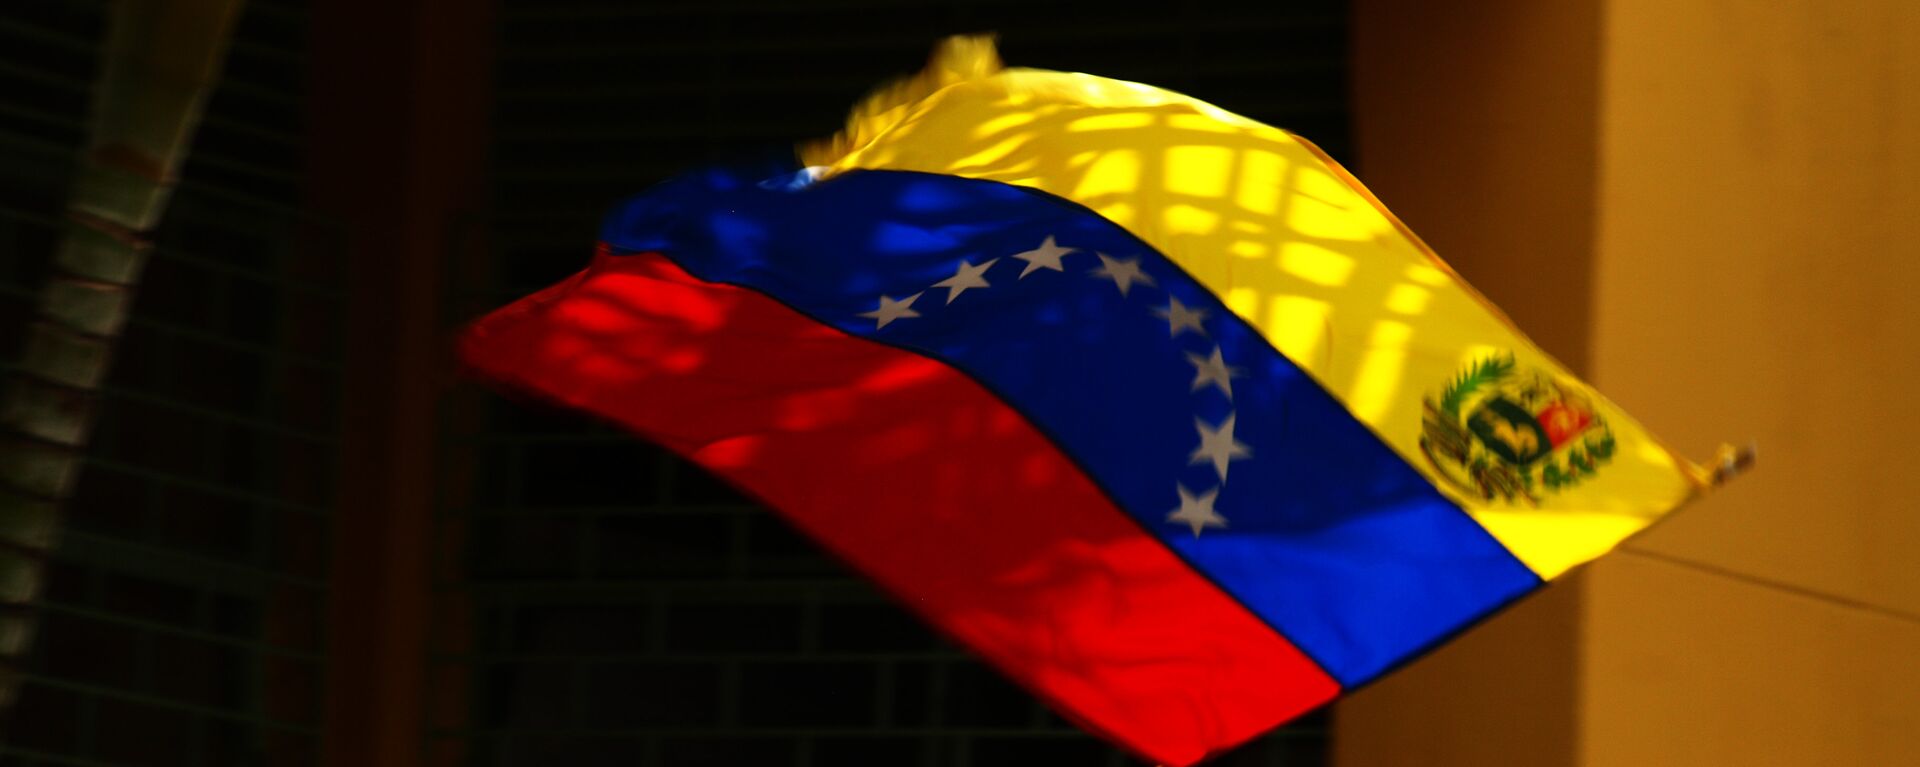 Bandera de Venezuela - Sputnik Mundo, 1920, 04.11.2021